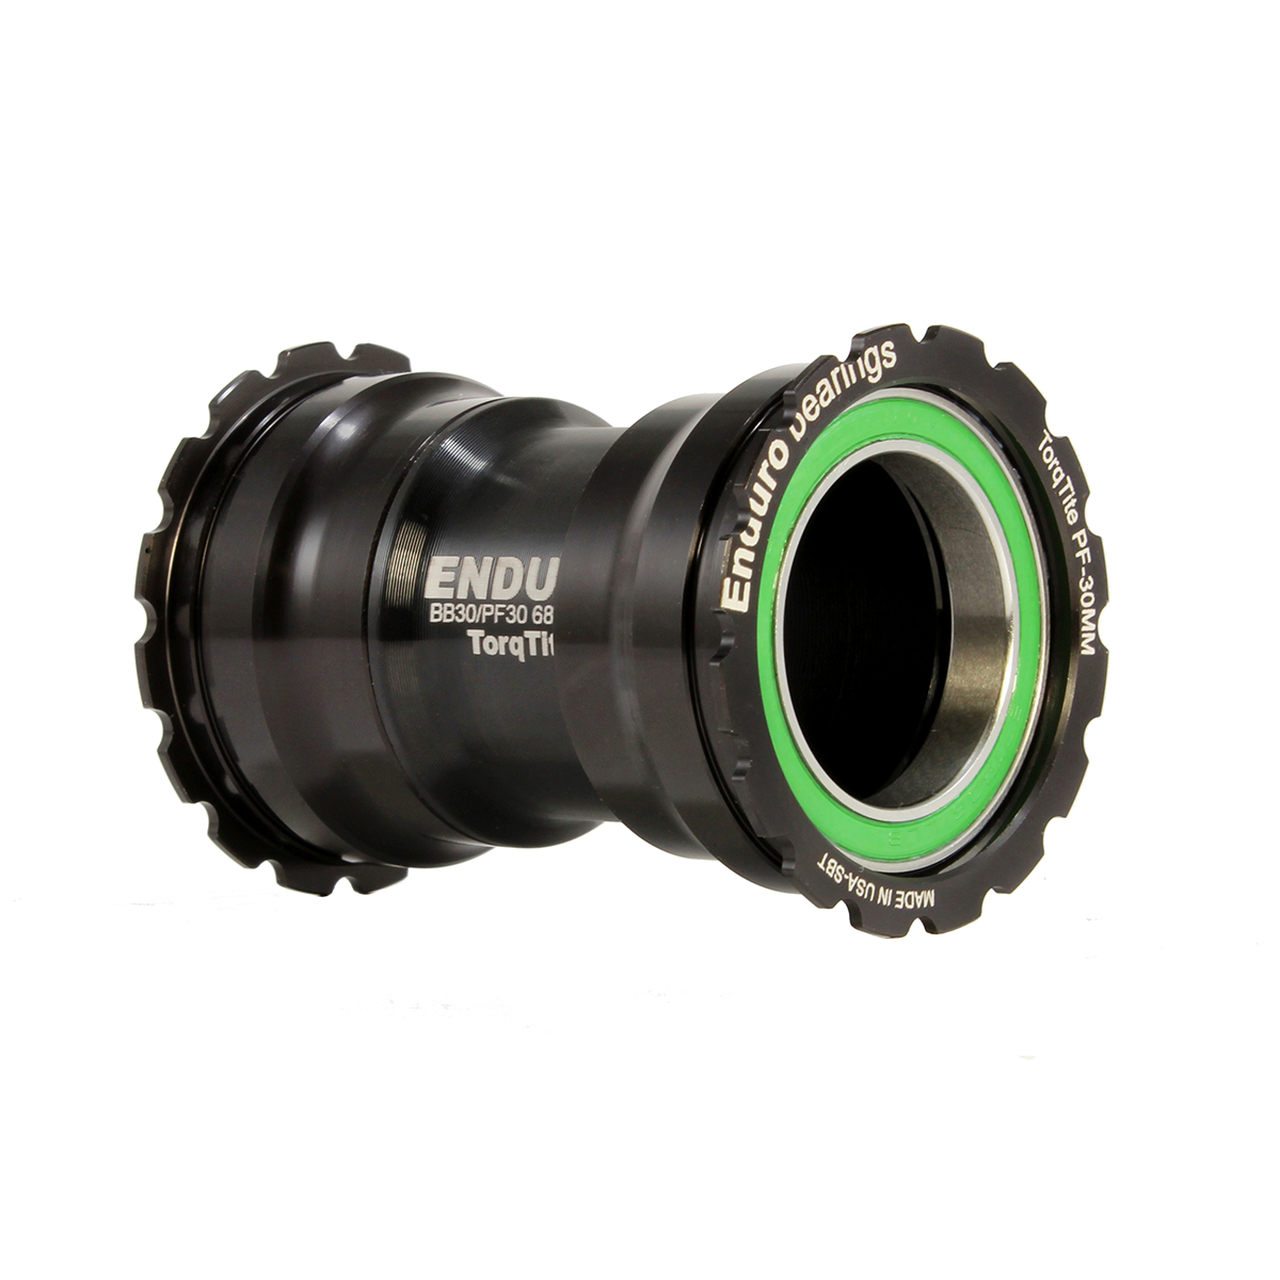 Enduro BKS-0131 - TorqTite, Stainless Steel, Angular Contact, Bearing Bottom Bracket for PF30 Framesets and 30mm Cranksets (under 104mm spindle length)